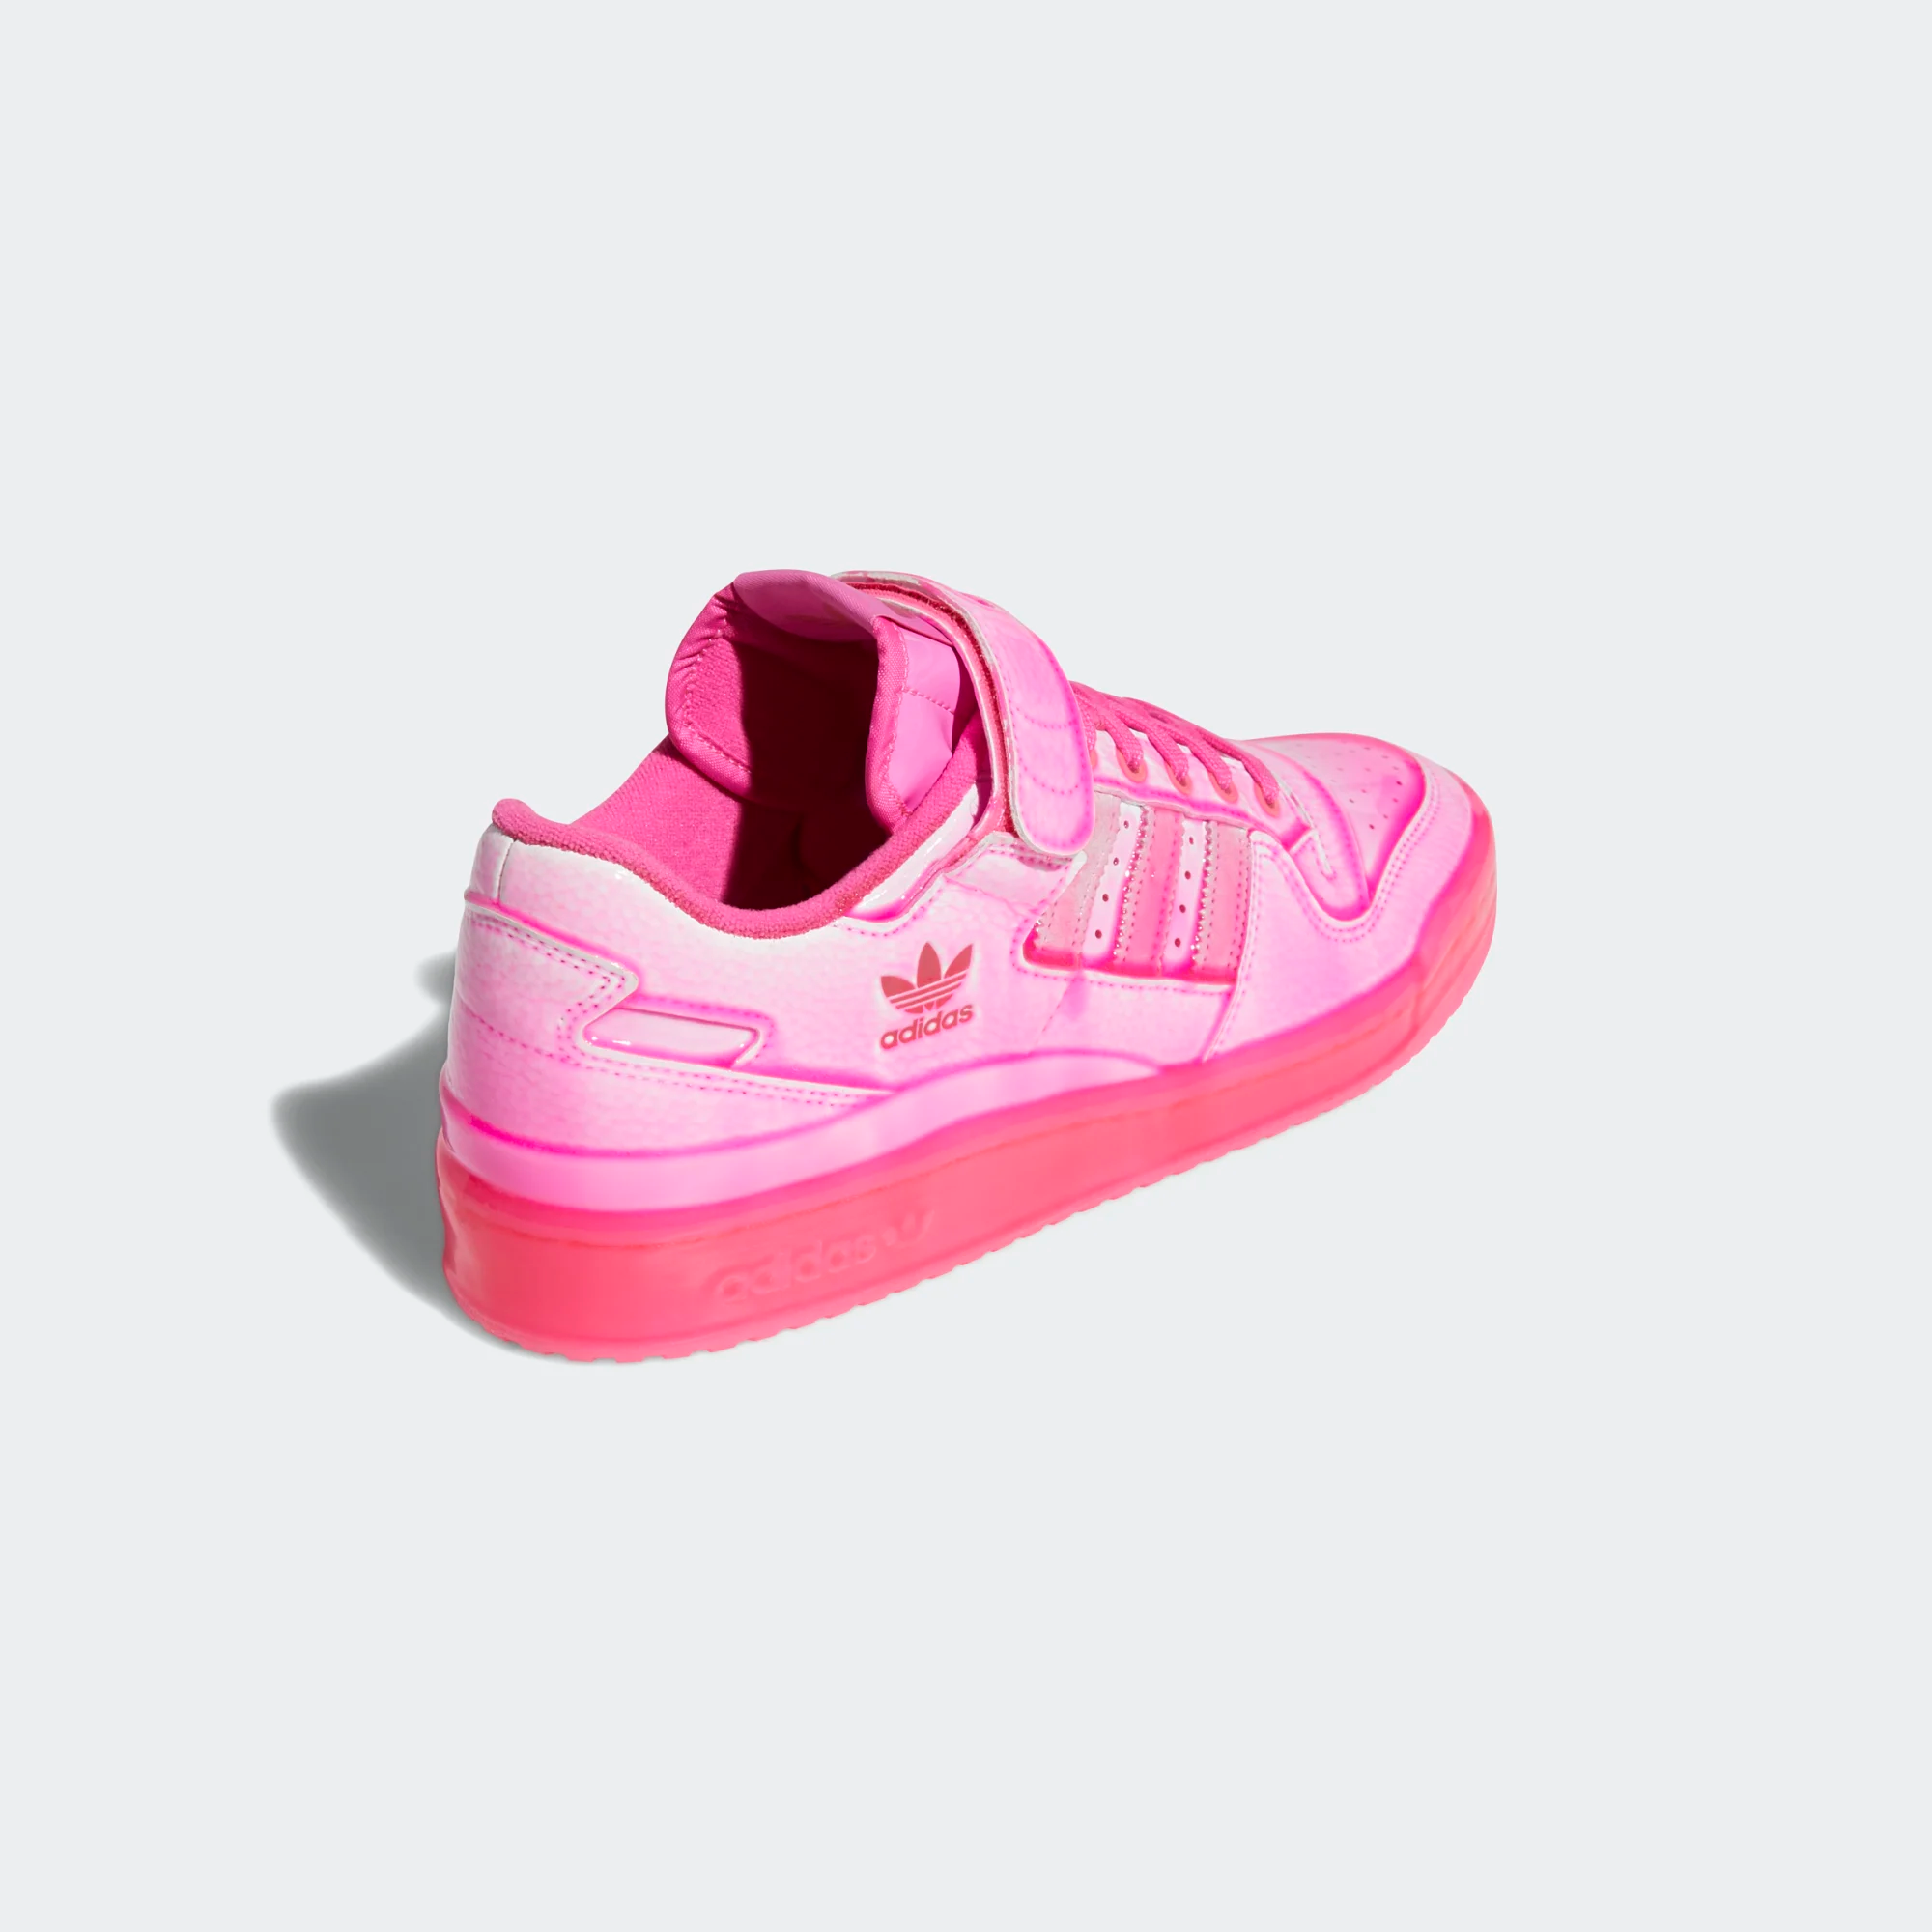 Jeremy Scott x adidas Forum Low 'DIP' Pink